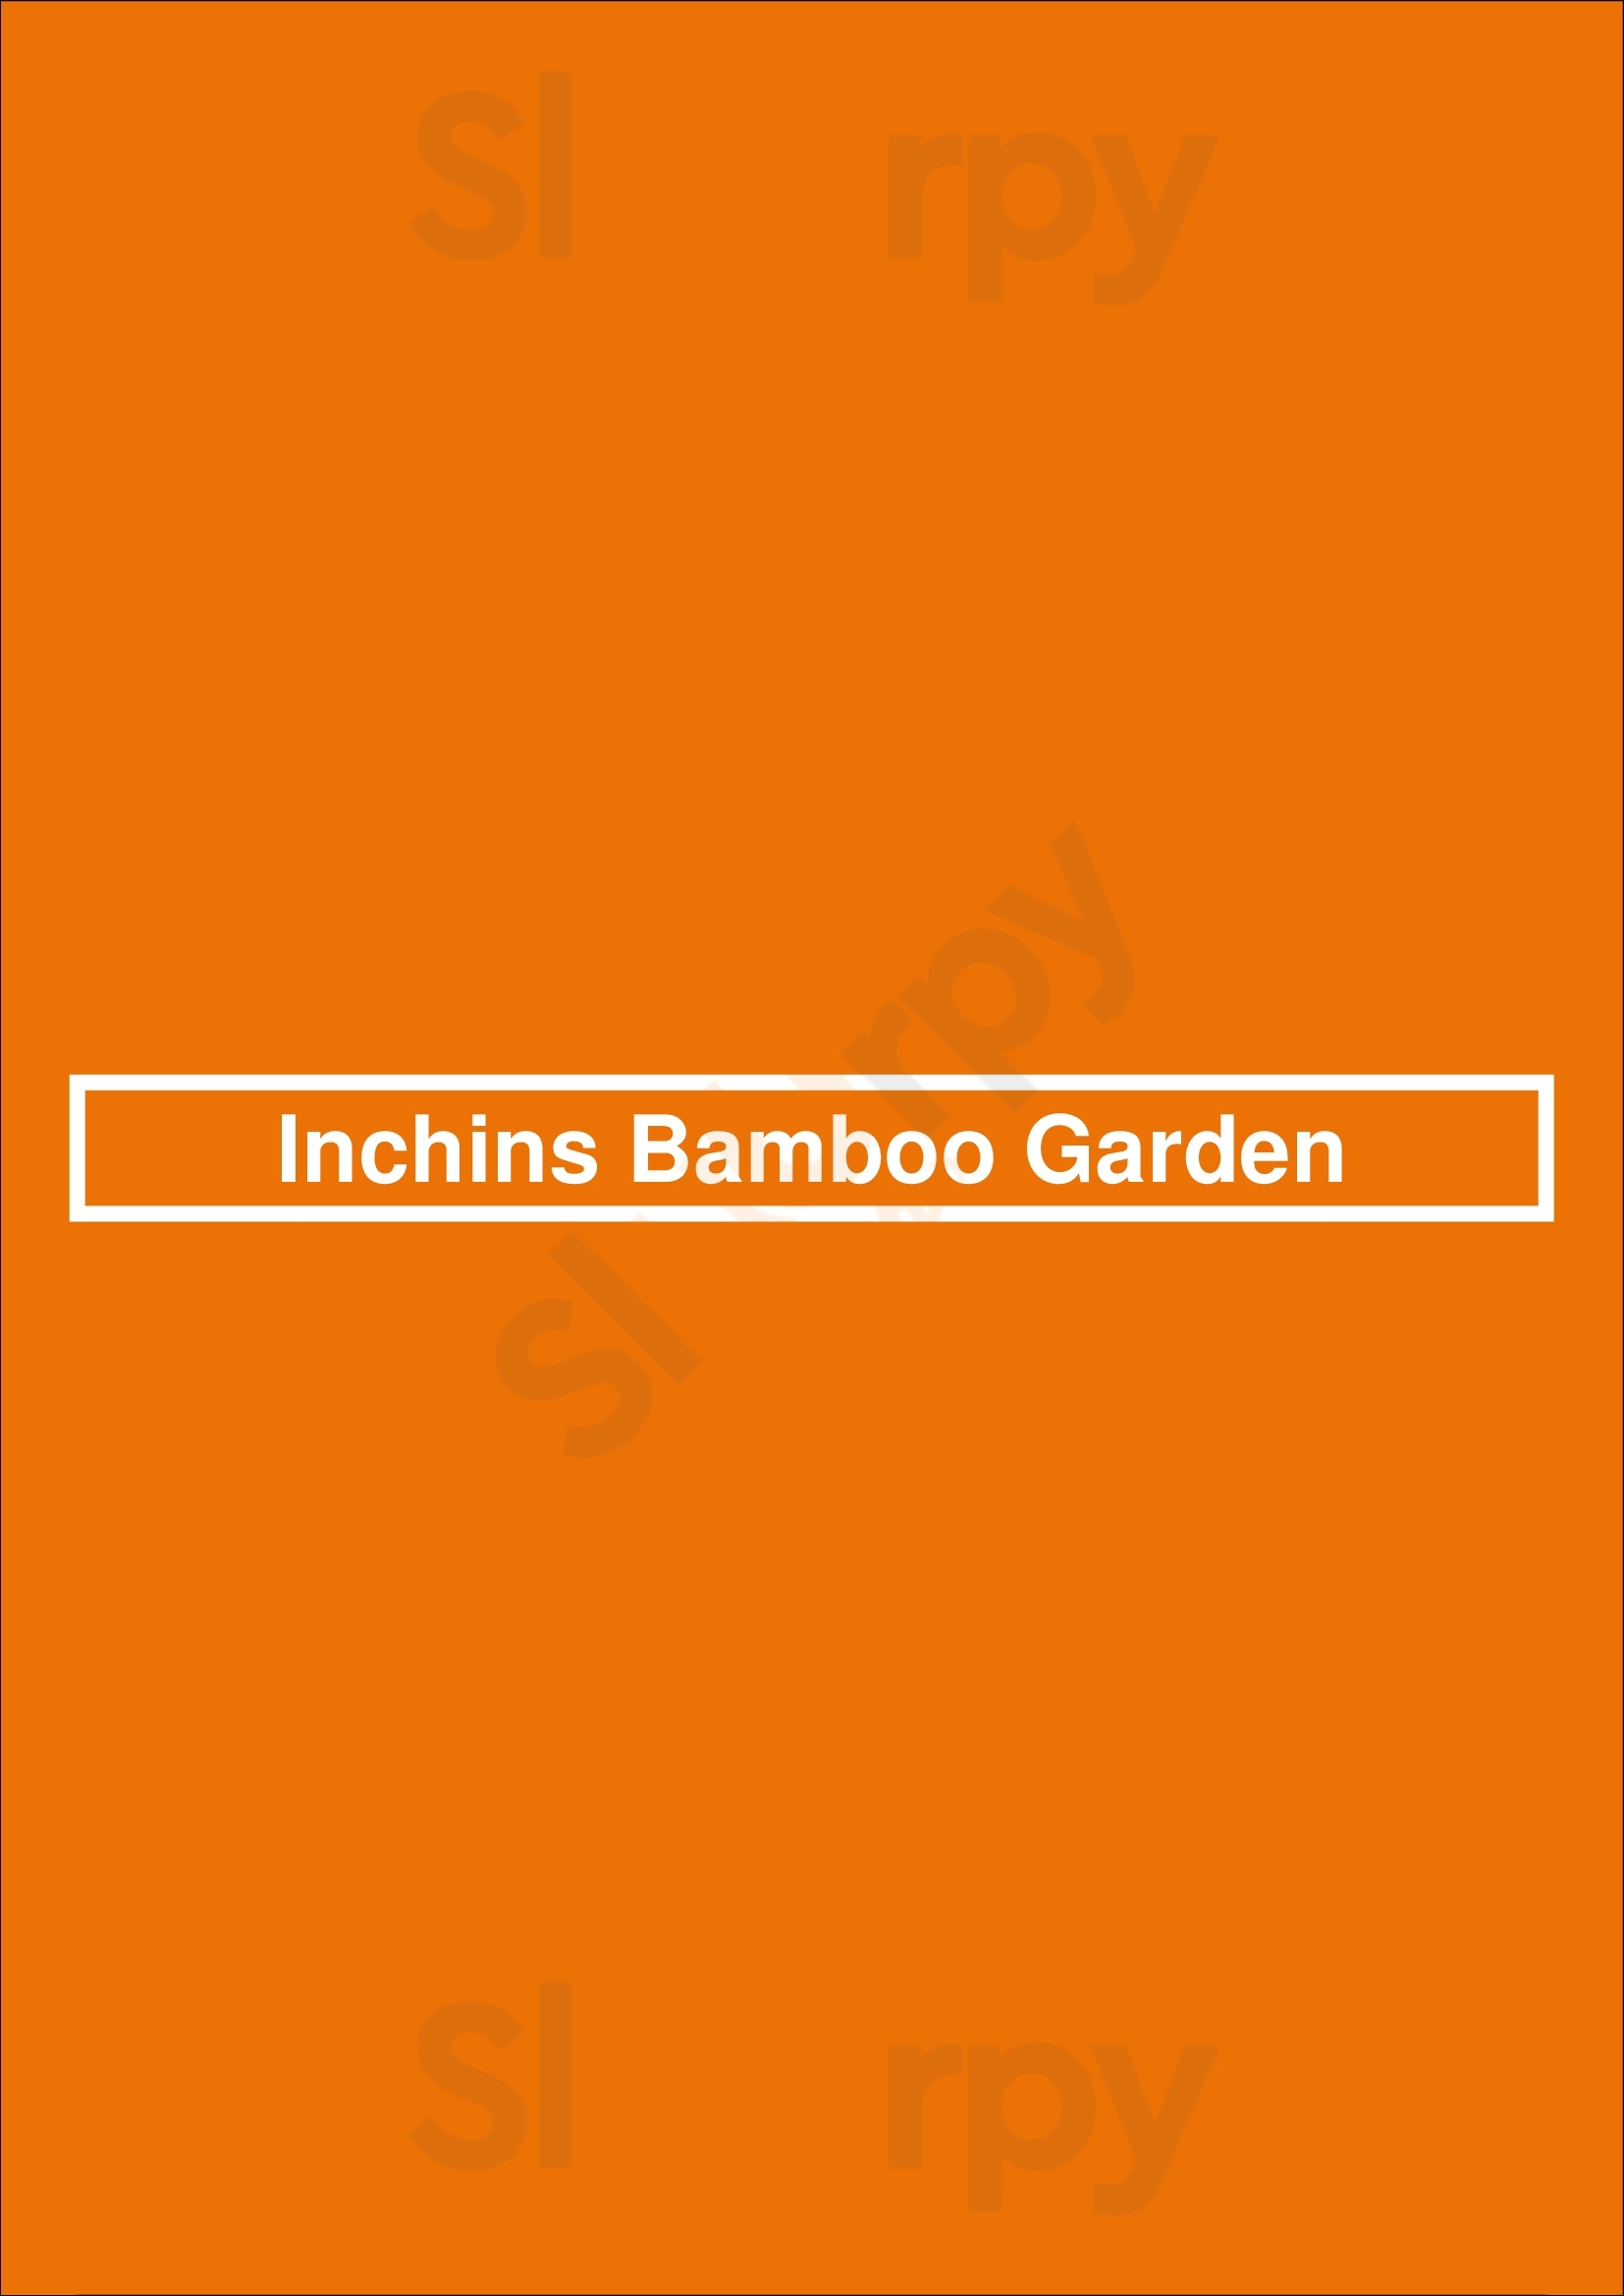 Inchins Bamboo Garden Nashville Menu - 1